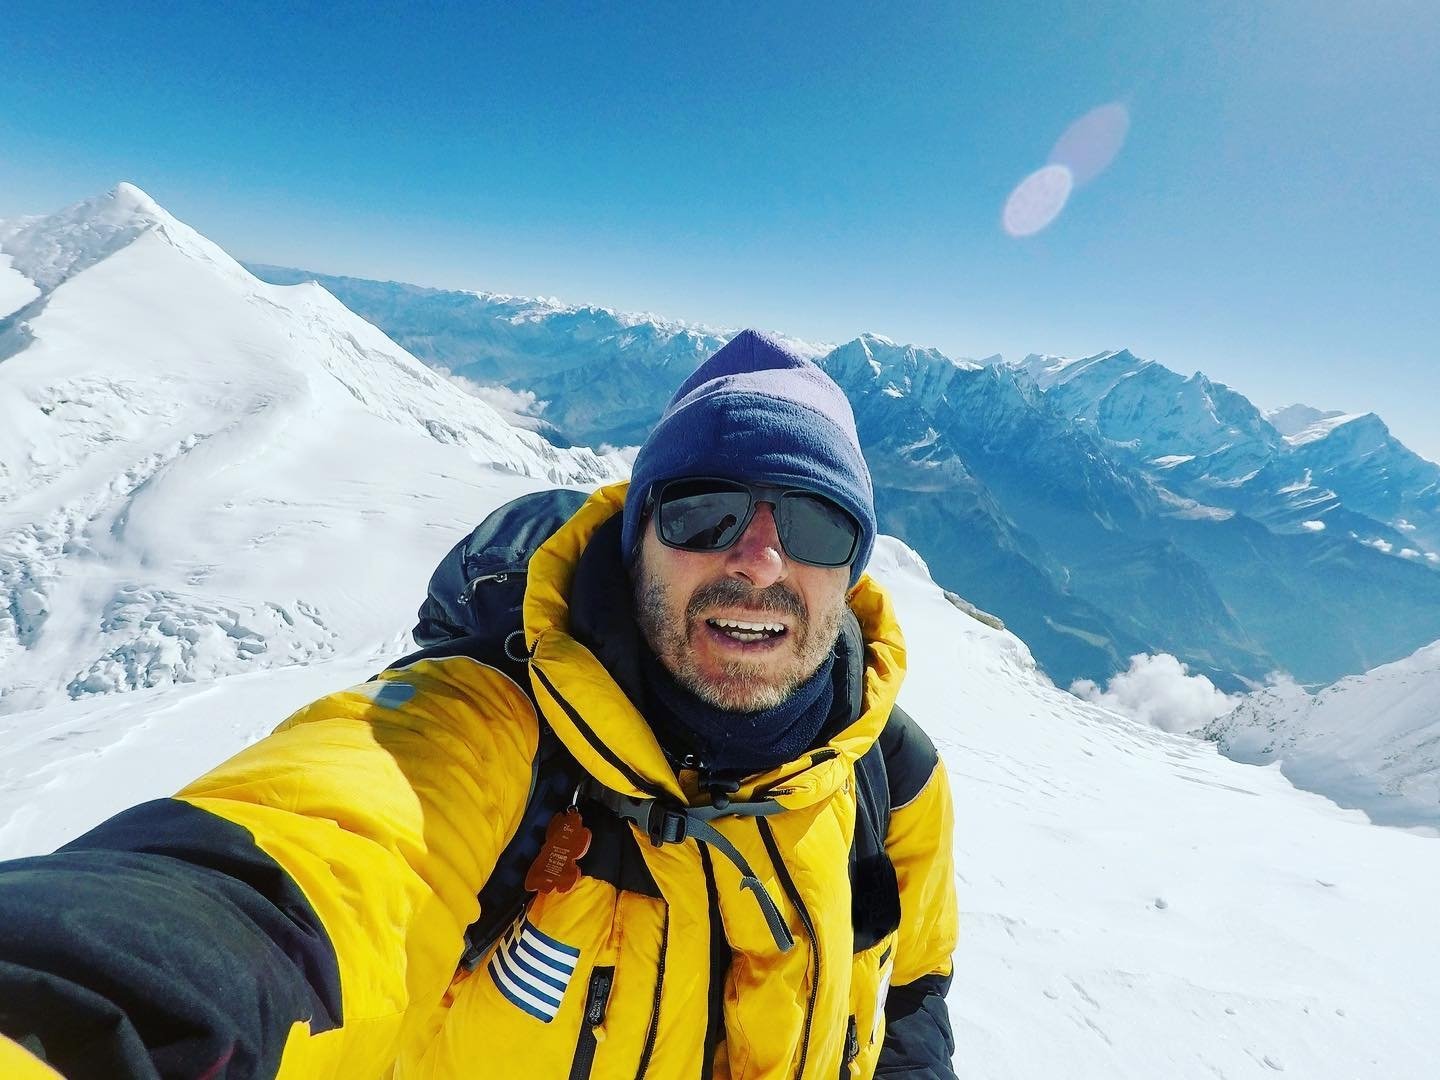 This undated photo shows Greek climber Antonios Sykaris during one of his climbing expeditions. (Antonios Sykaris on Instagram)